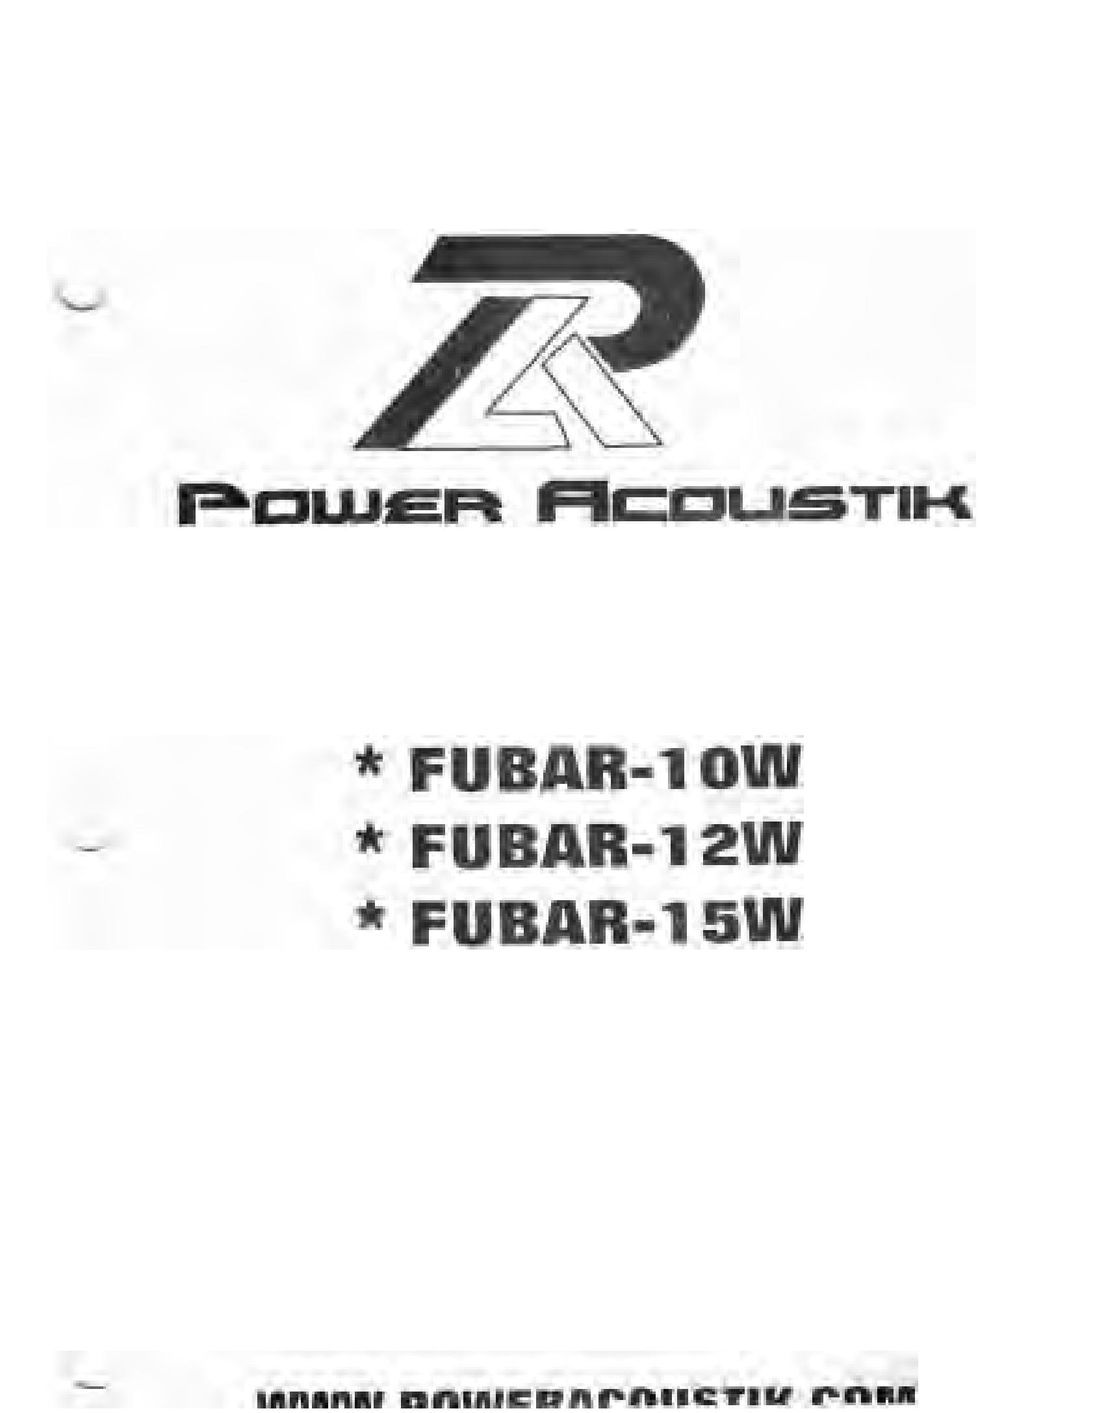 Power Acoustik FUBAR-12W Car Speaker User Manual